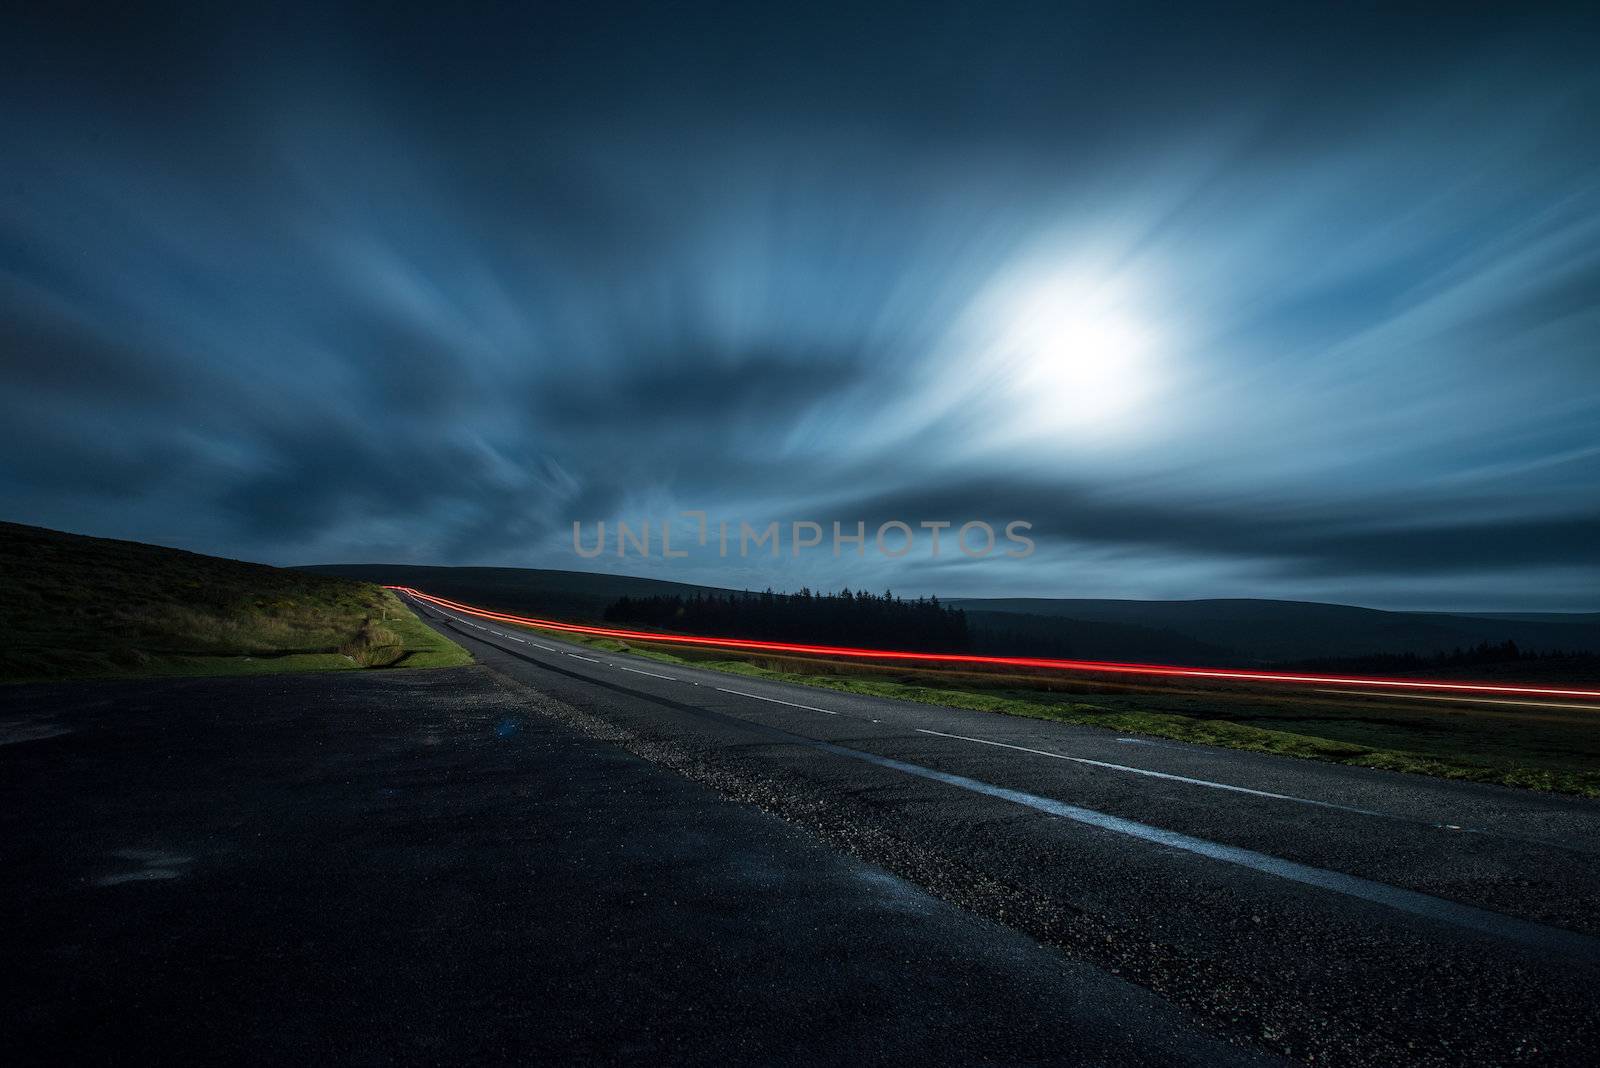 Blur night shoot of fast driving car by merc67